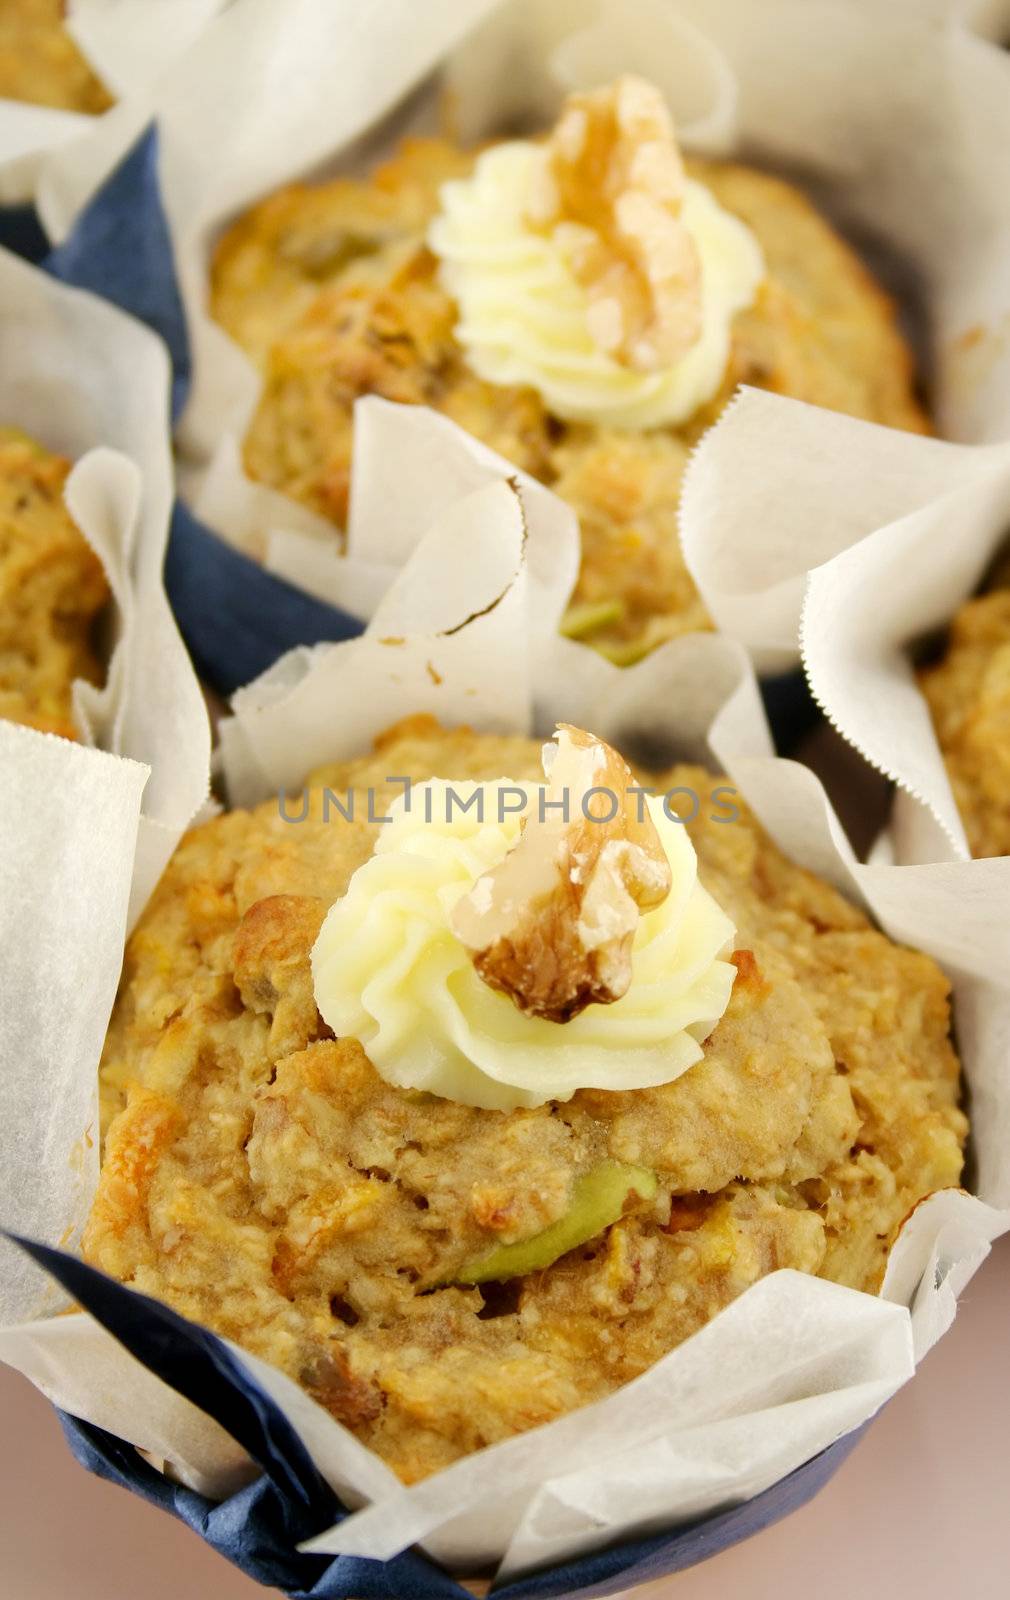 Fruit Muffins With Walnuts 2 by jabiru